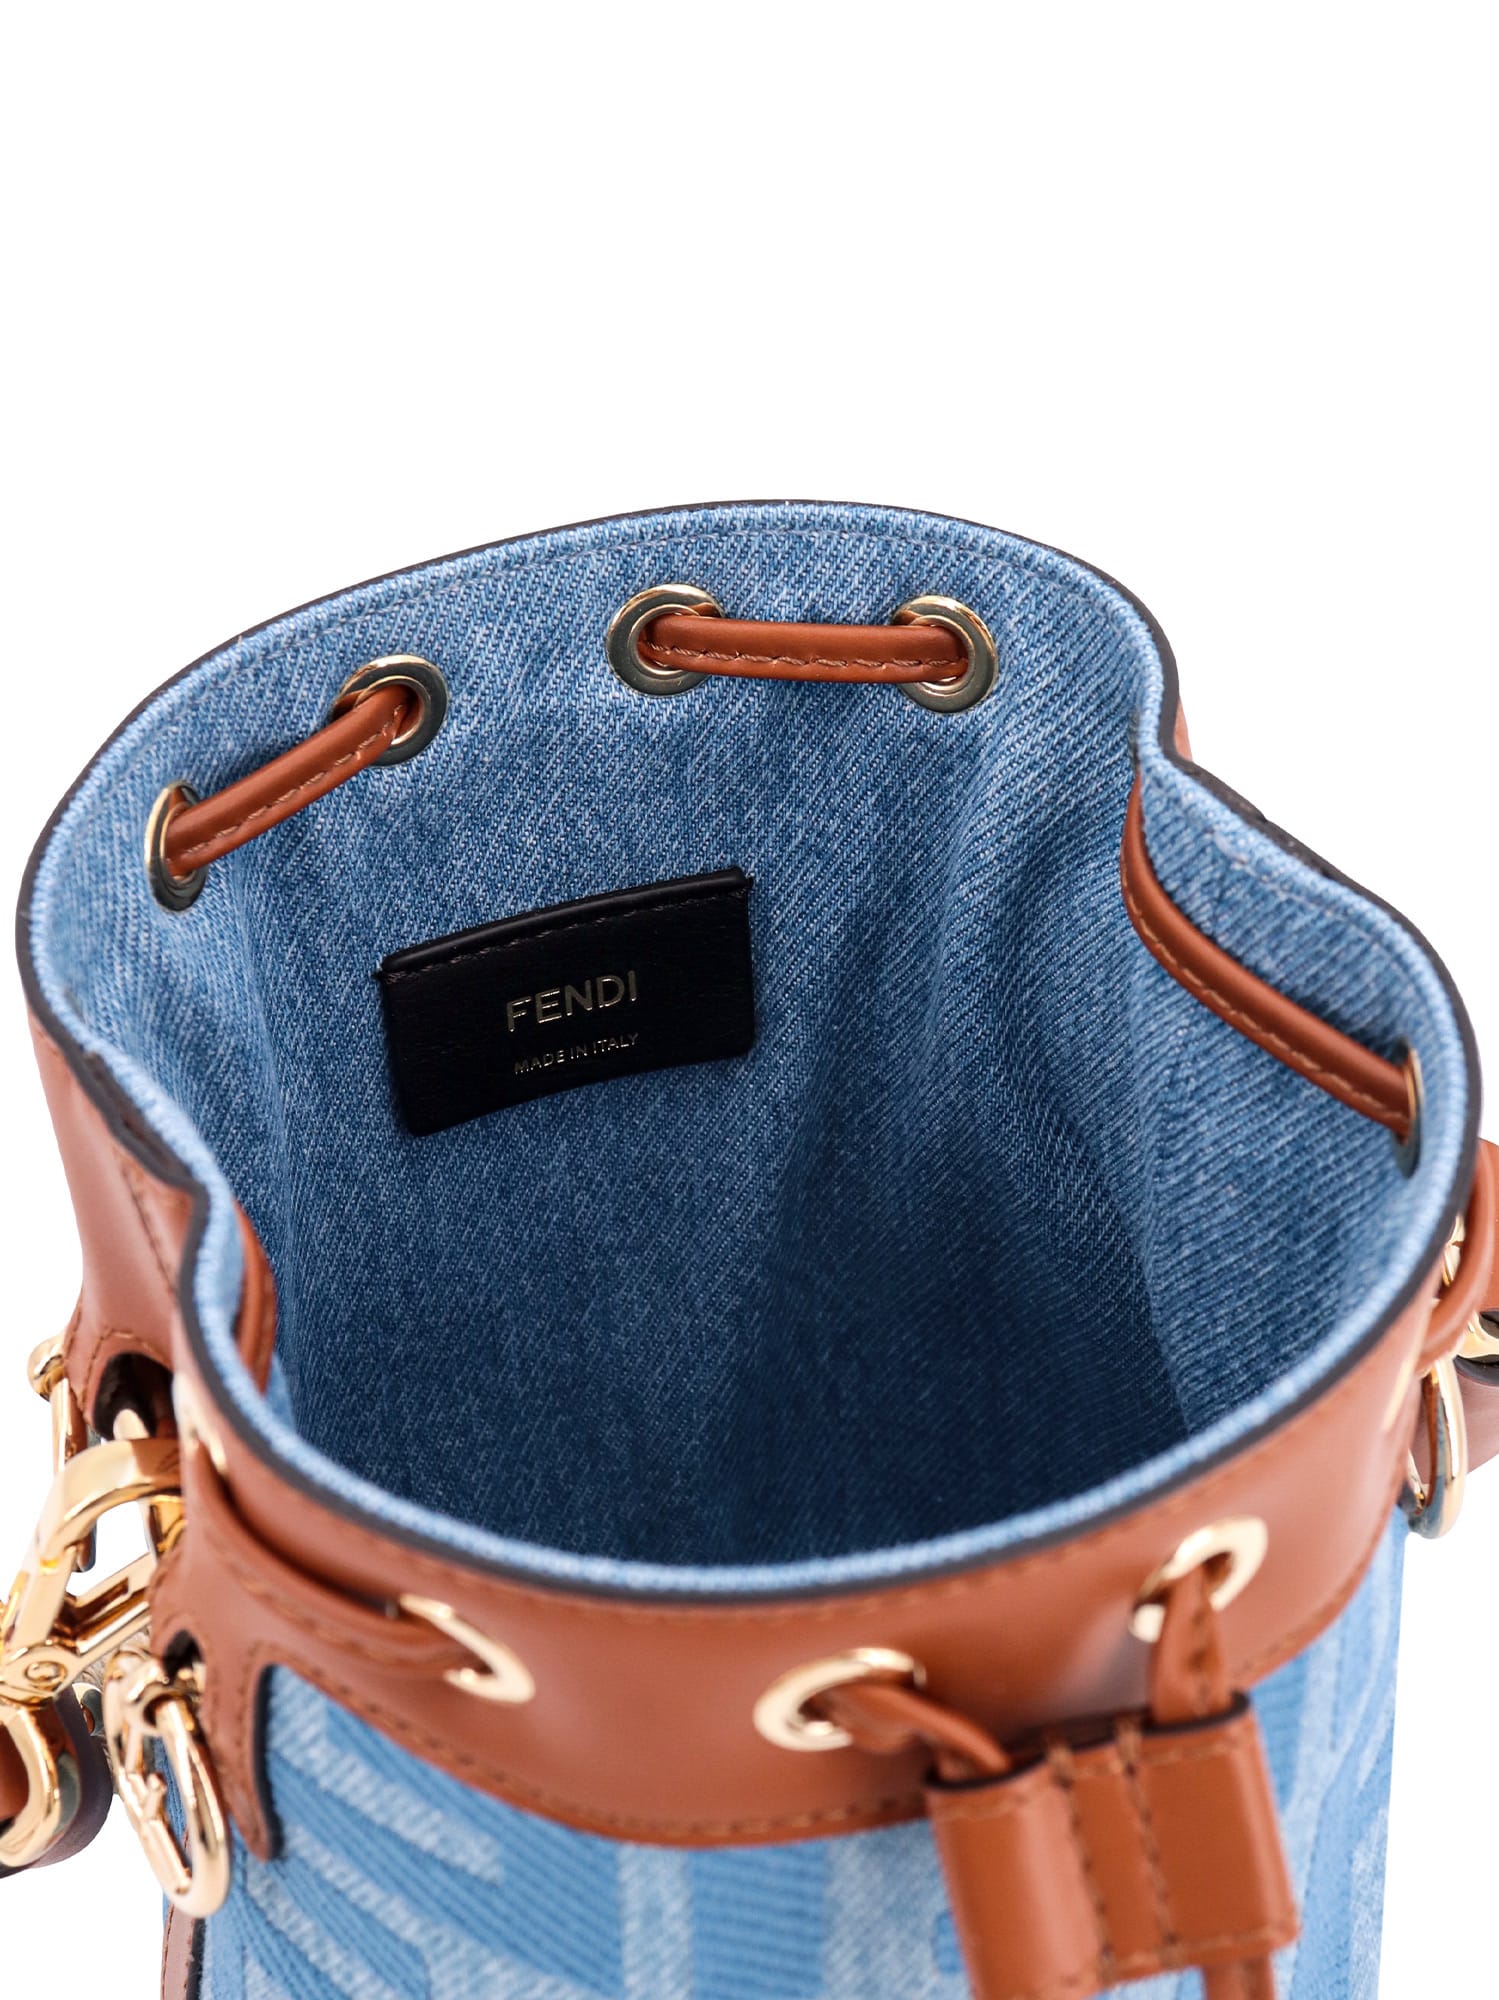 Fendi Mon tresor - Bucket bag for Woman - Blue - 8BS010AP4N-F1LB6